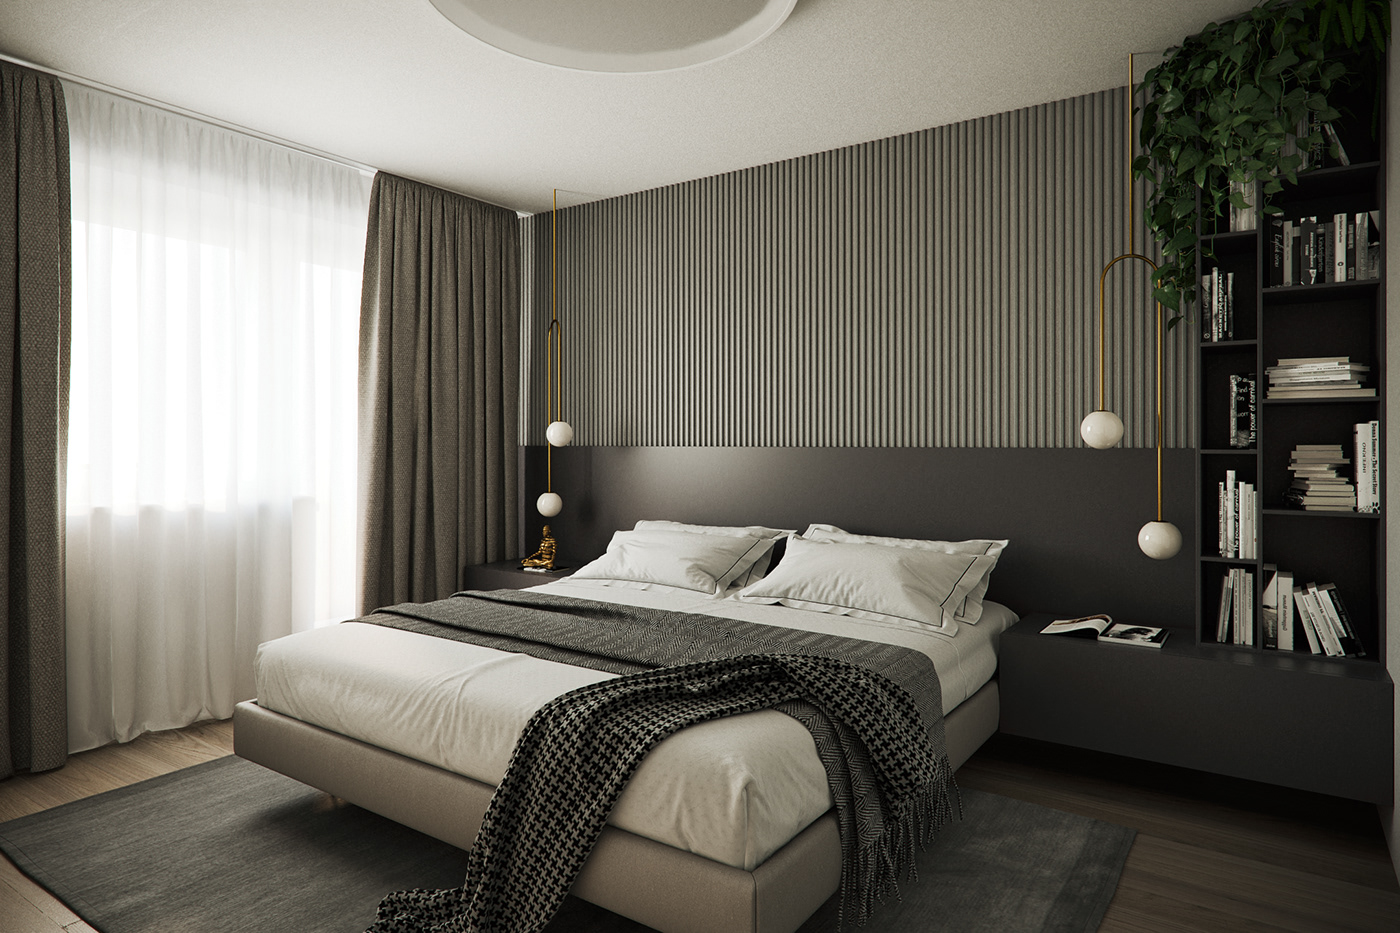 3ds max architecture archviz bedroom CGI corona render  exterior interior design  kitchen visualization